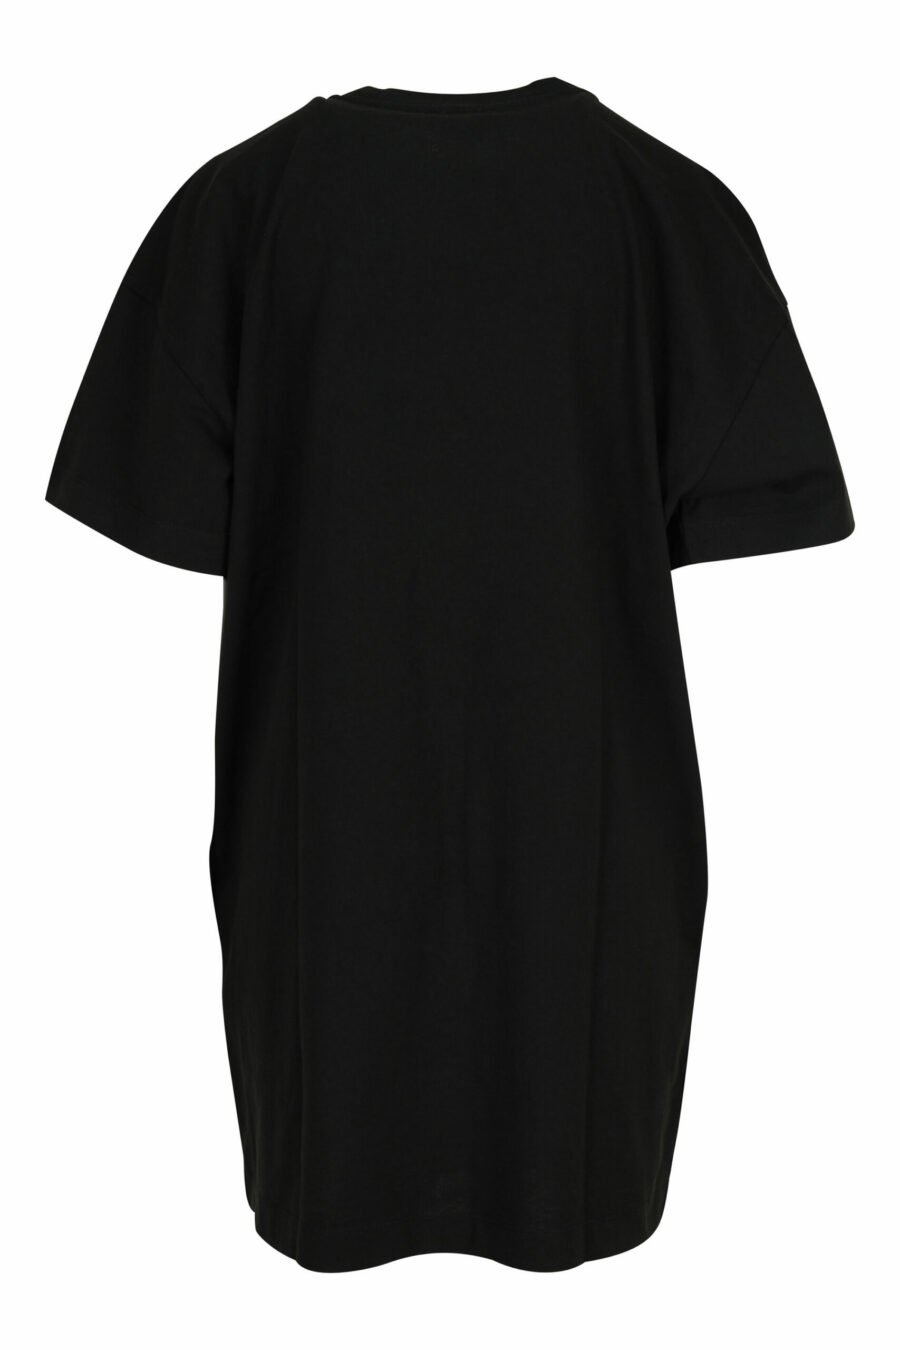 Robe noire avec mini-logo "boke flower" - 3612230546486 1 à l'échelle